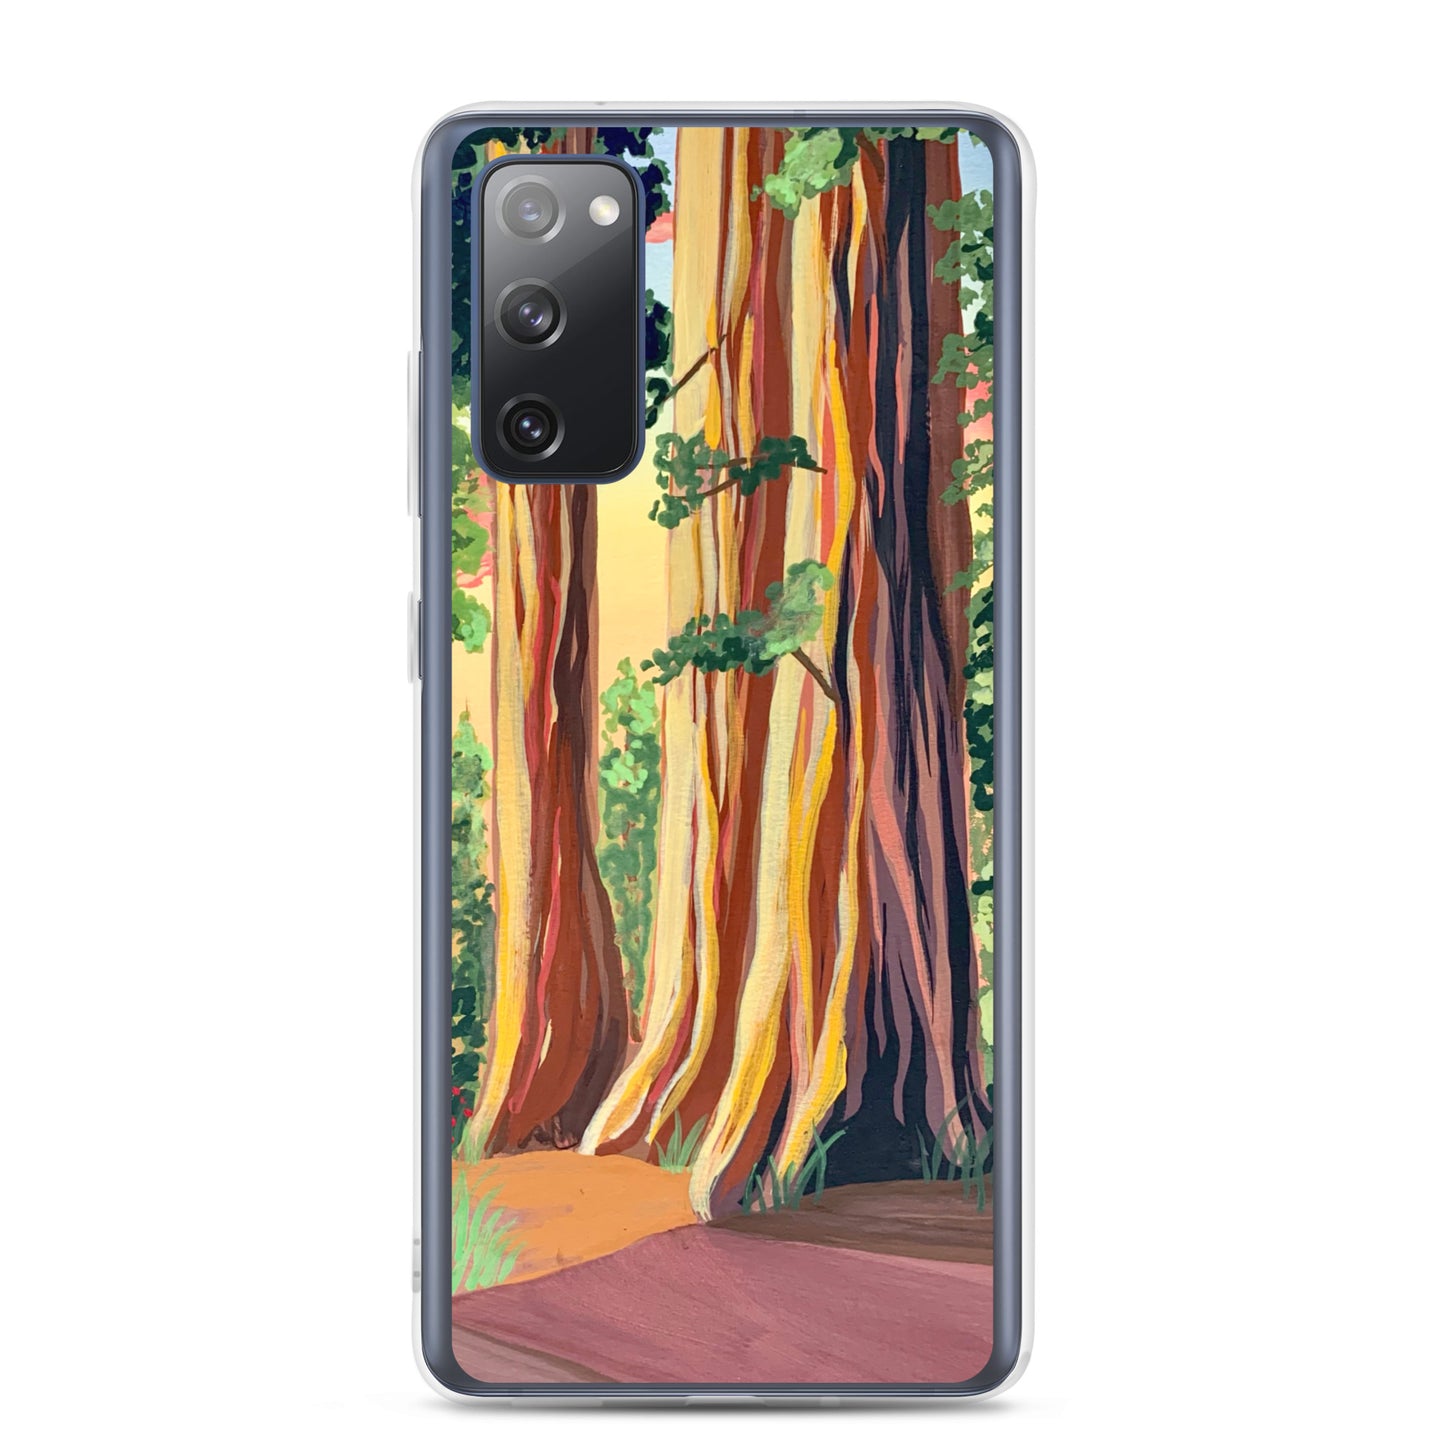 Redwoods National Park Samsung Phone Case